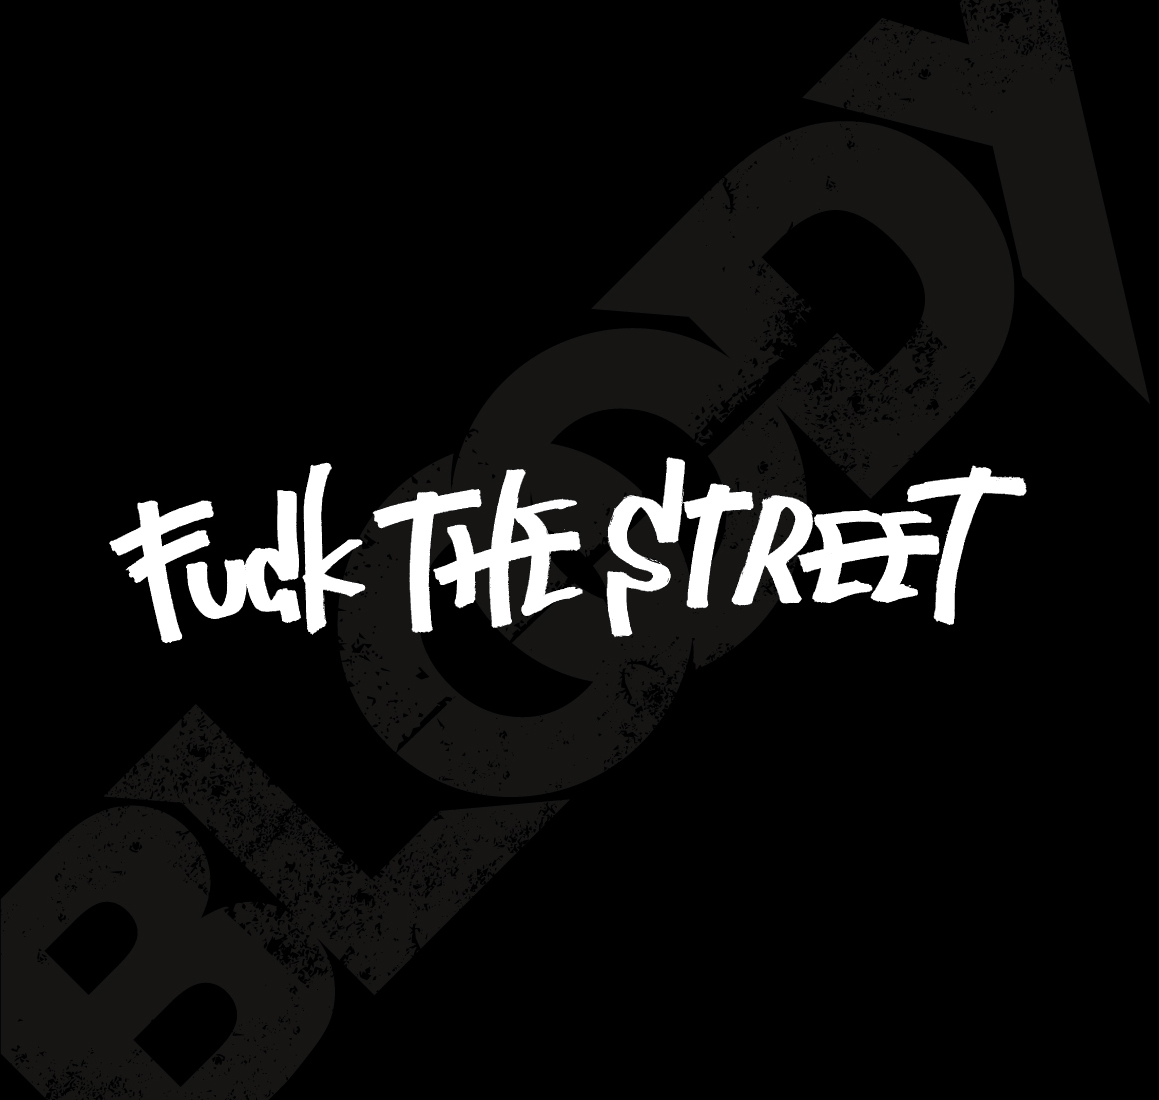 Bloody / FUCK THE STREET